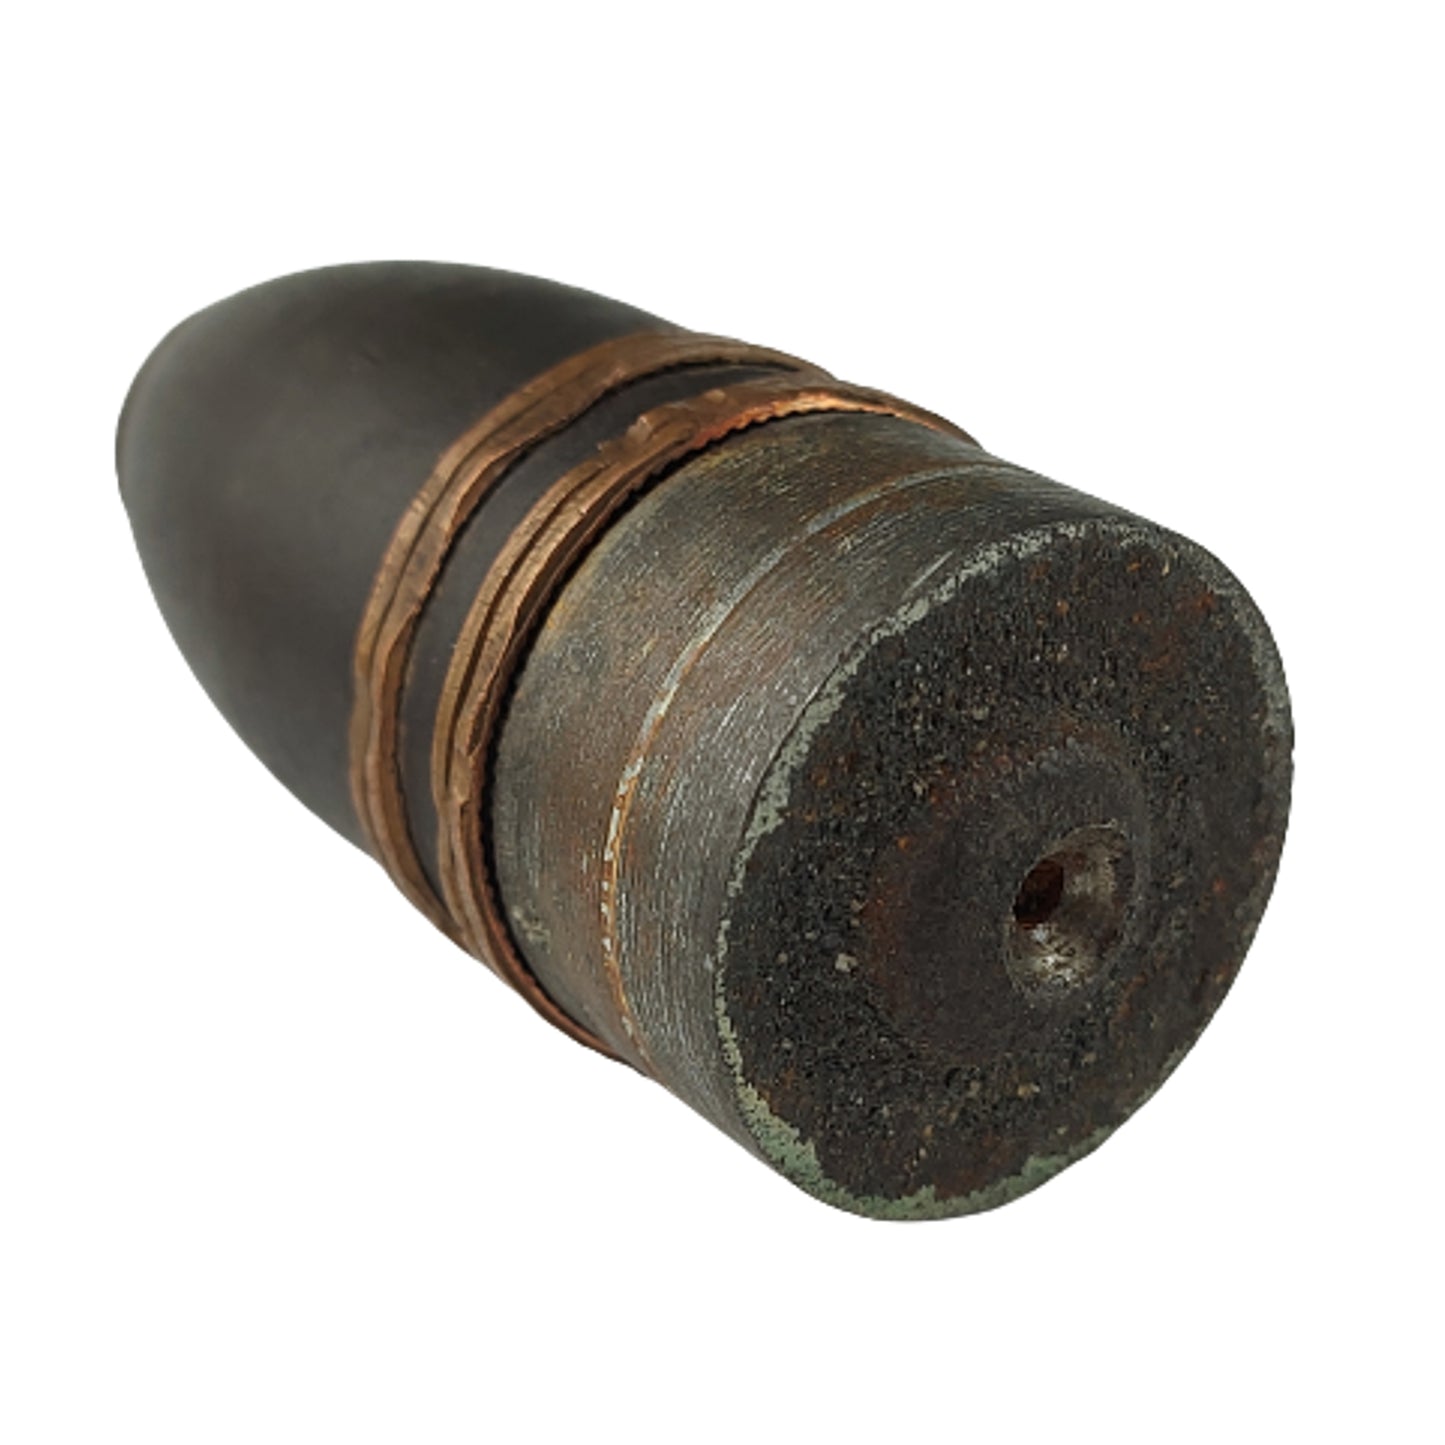 Inert WW1 37mm "Pom-Pom" Field Gun Shell With Projectile